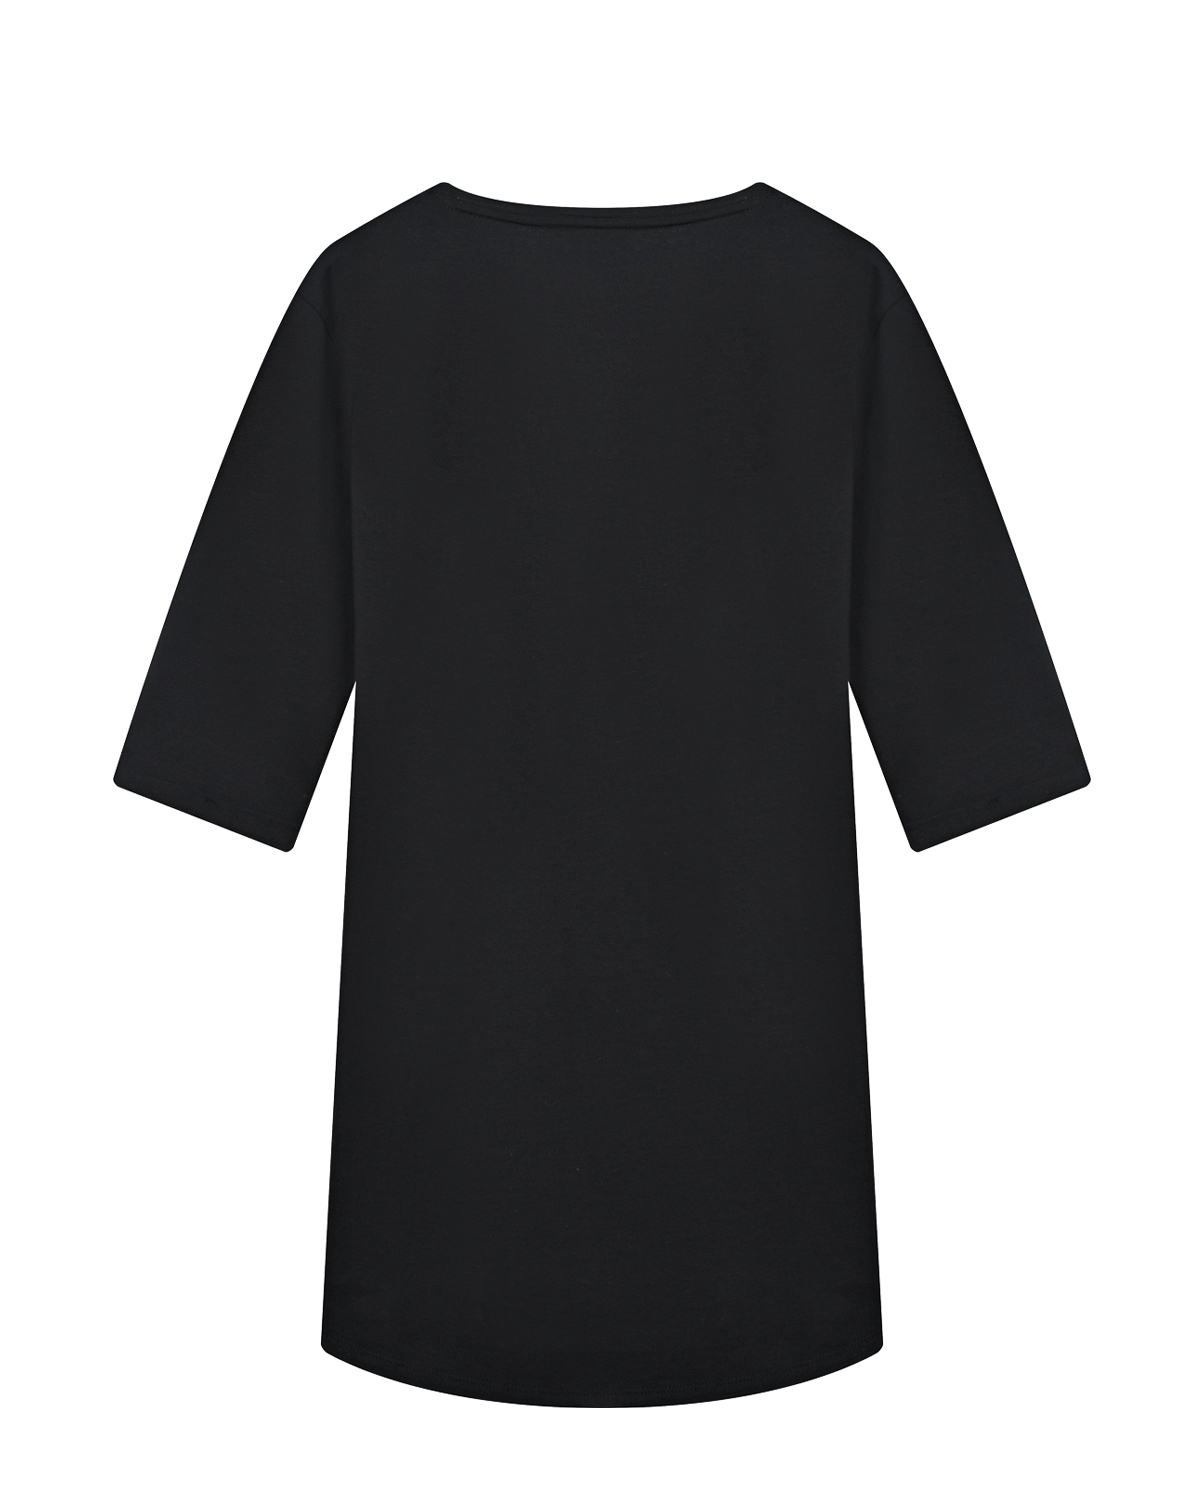 Черная футболка с рукавами 3/4 Guess детская, размер 122, цвет черный Черная футболка с рукавами 3/4 Guess детская - фото 2